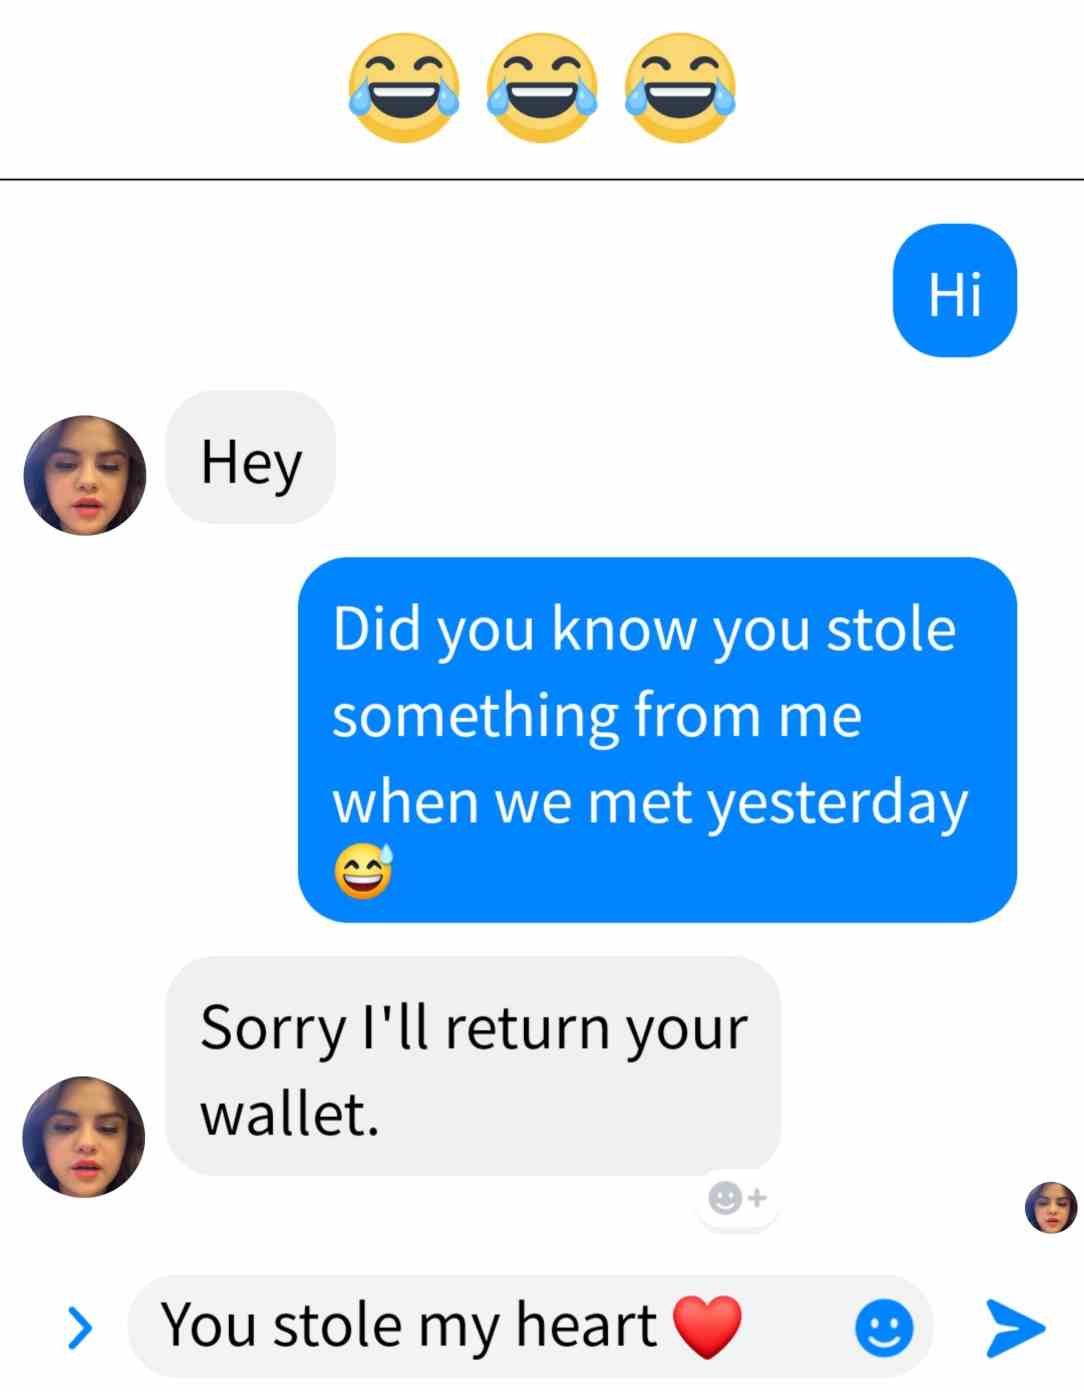 I'll return your wallet